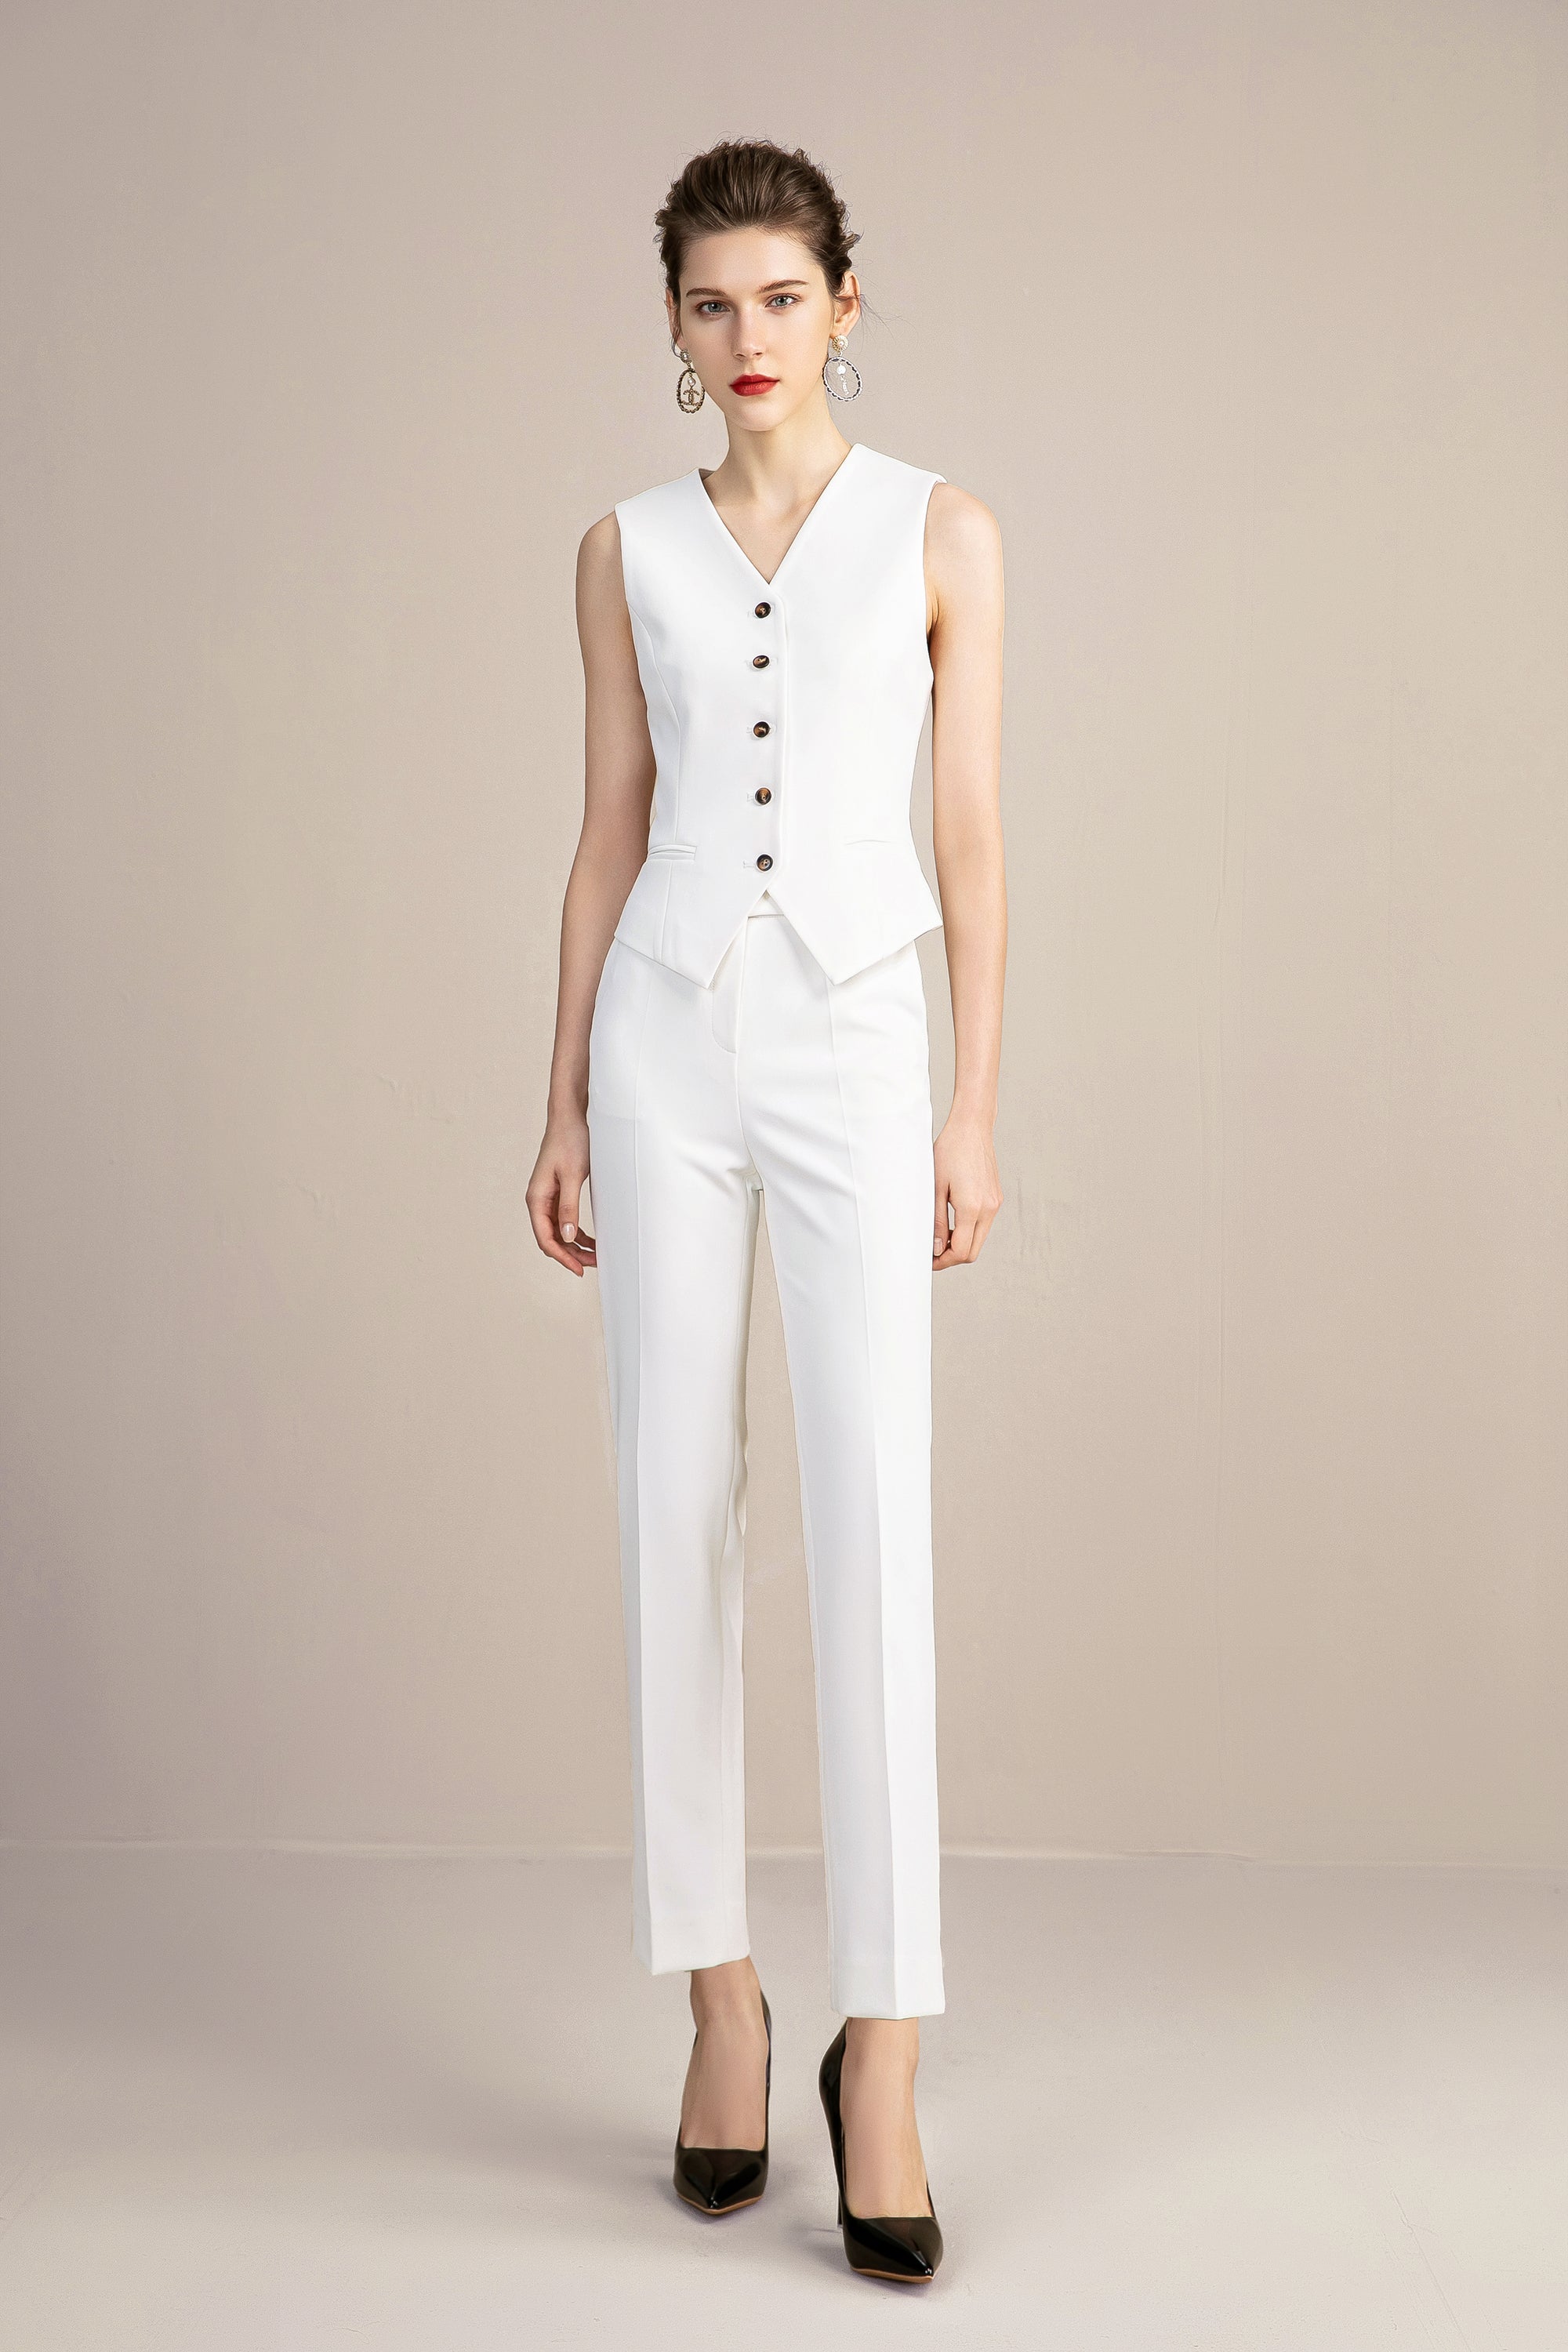 Three Pcs White Pants Suits - FashionByTeresa